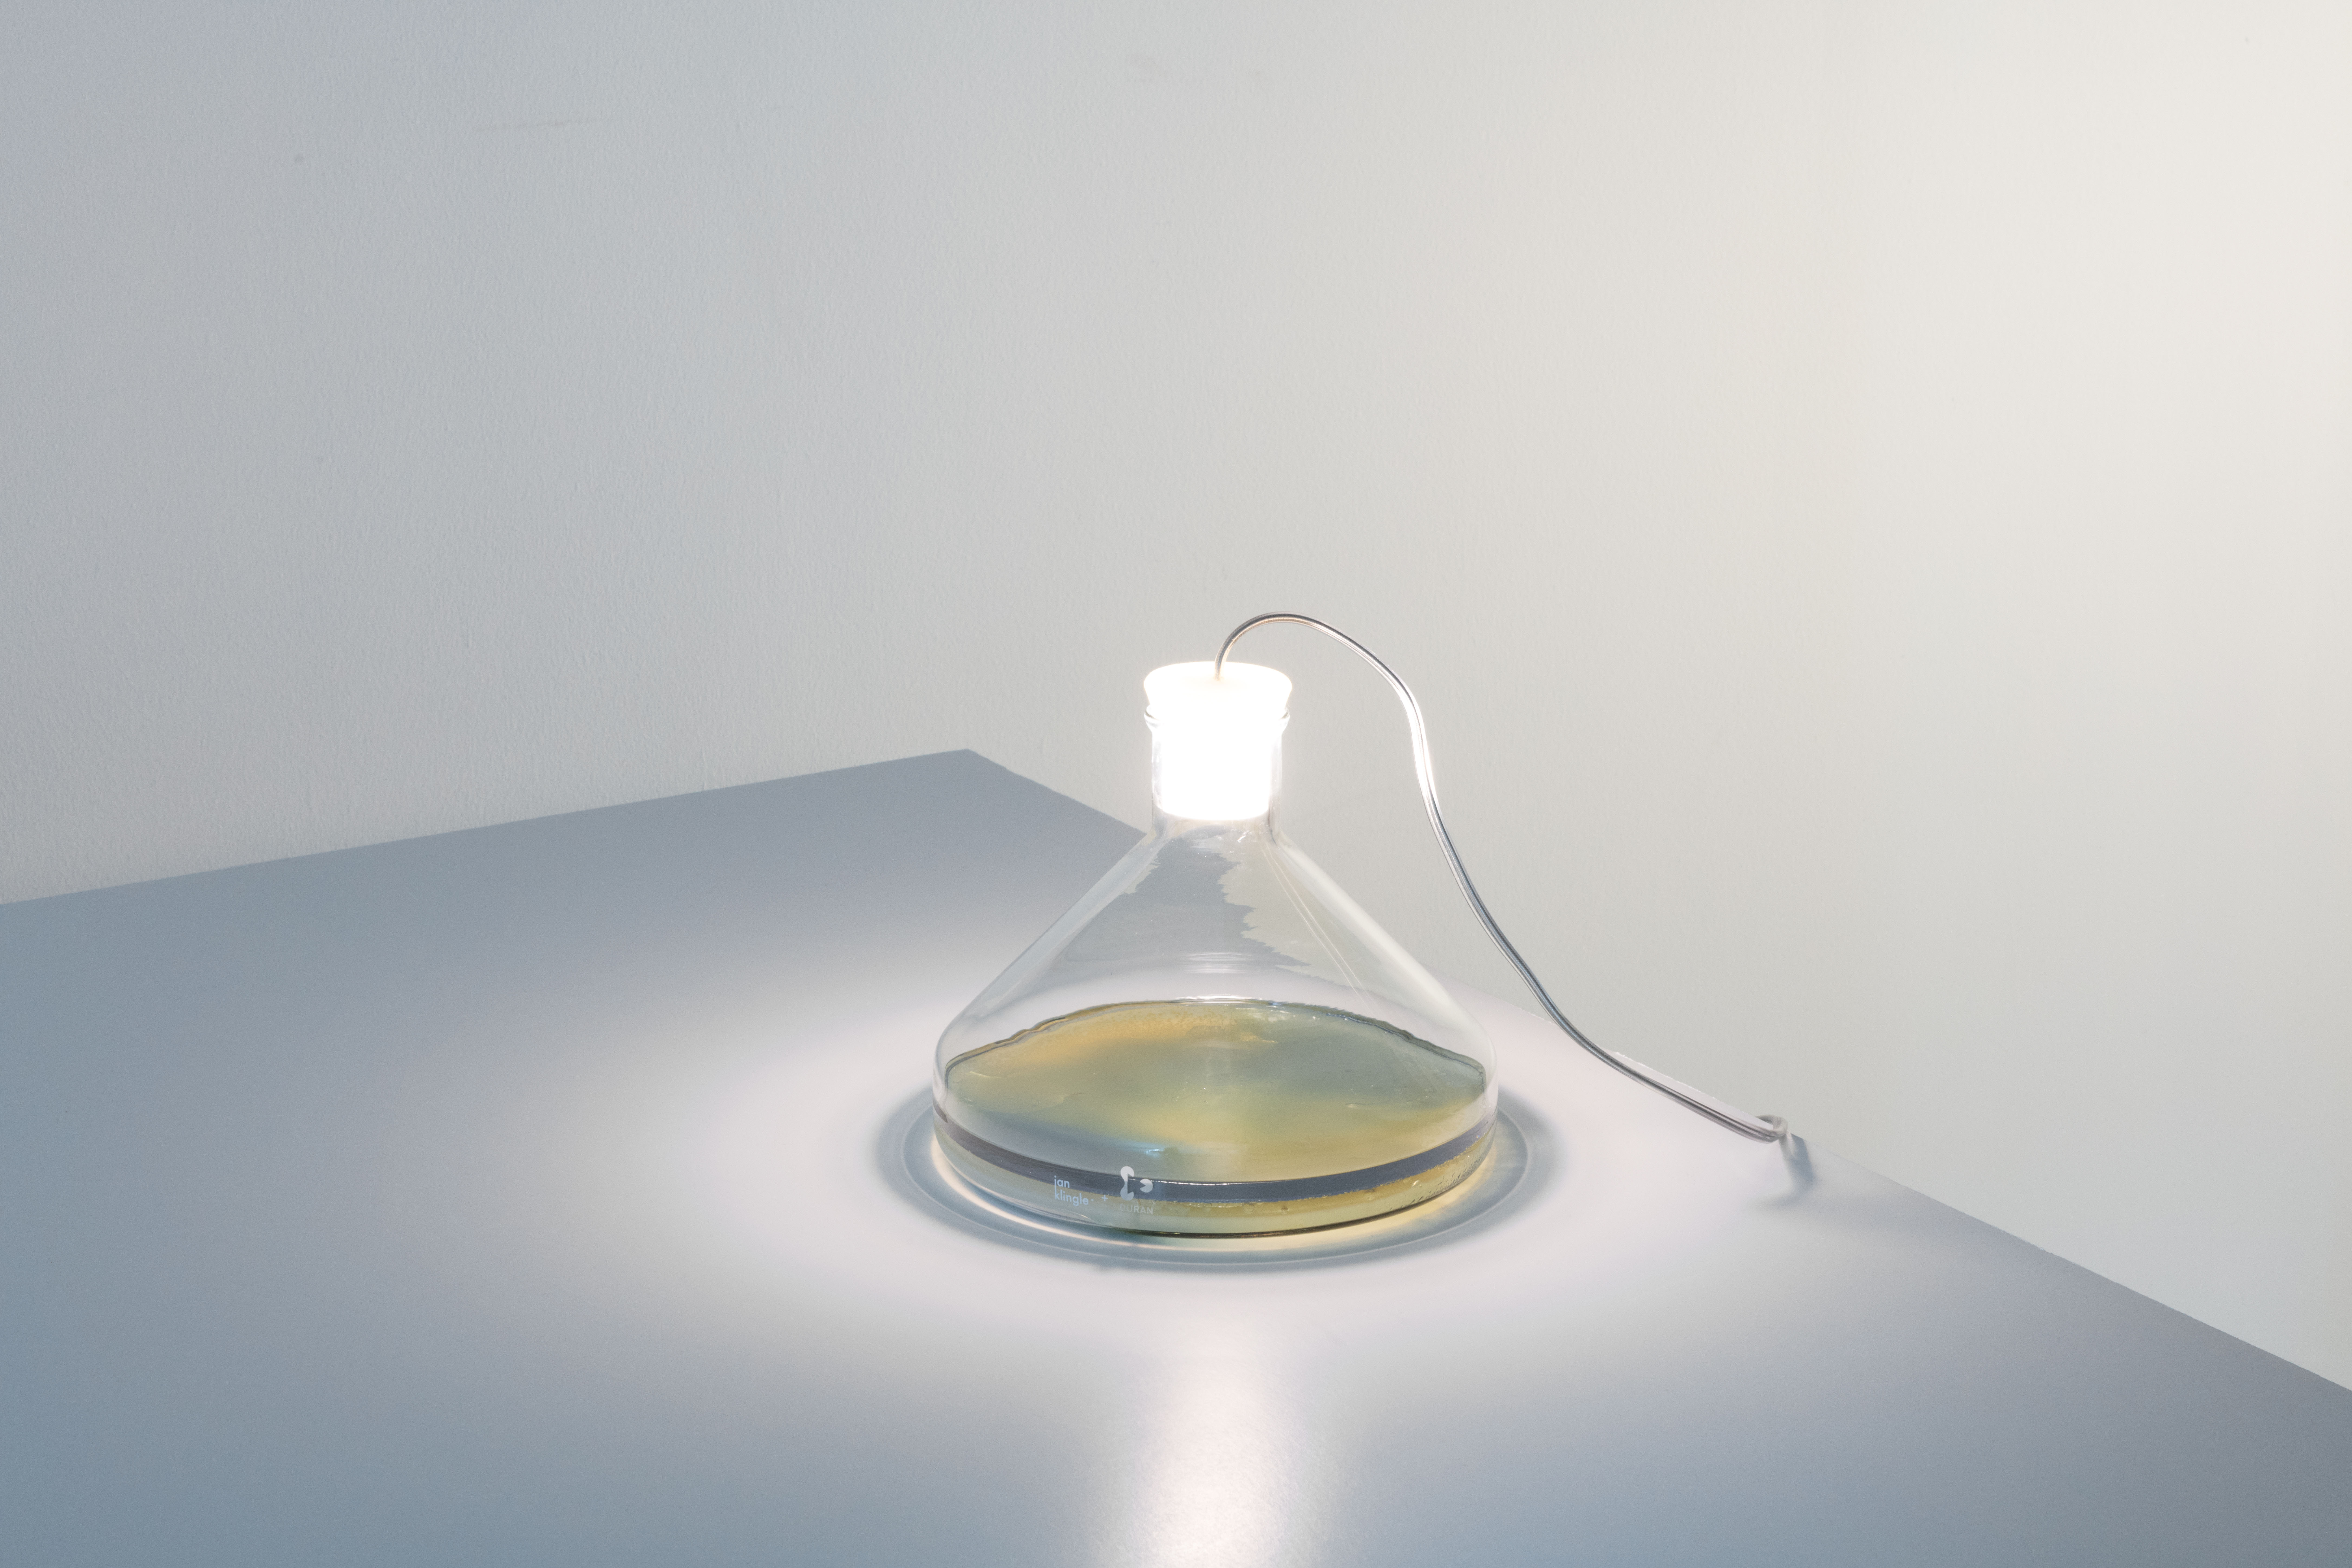 Liquid glass - MaterialDistrict